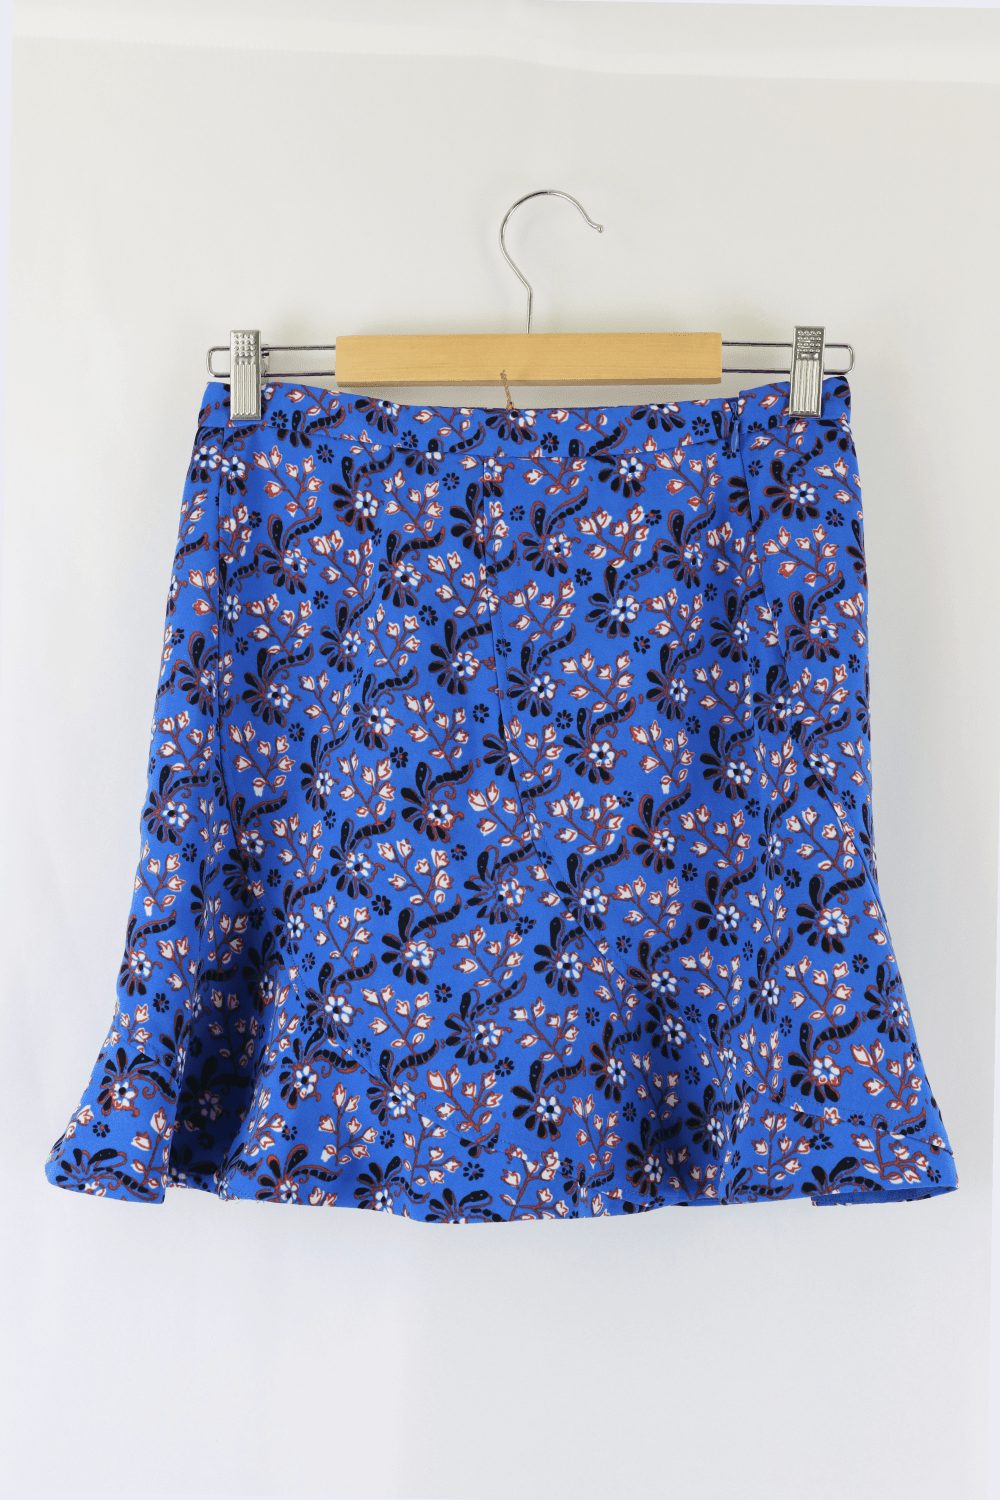 J Crew Blue Floral Skirt XS